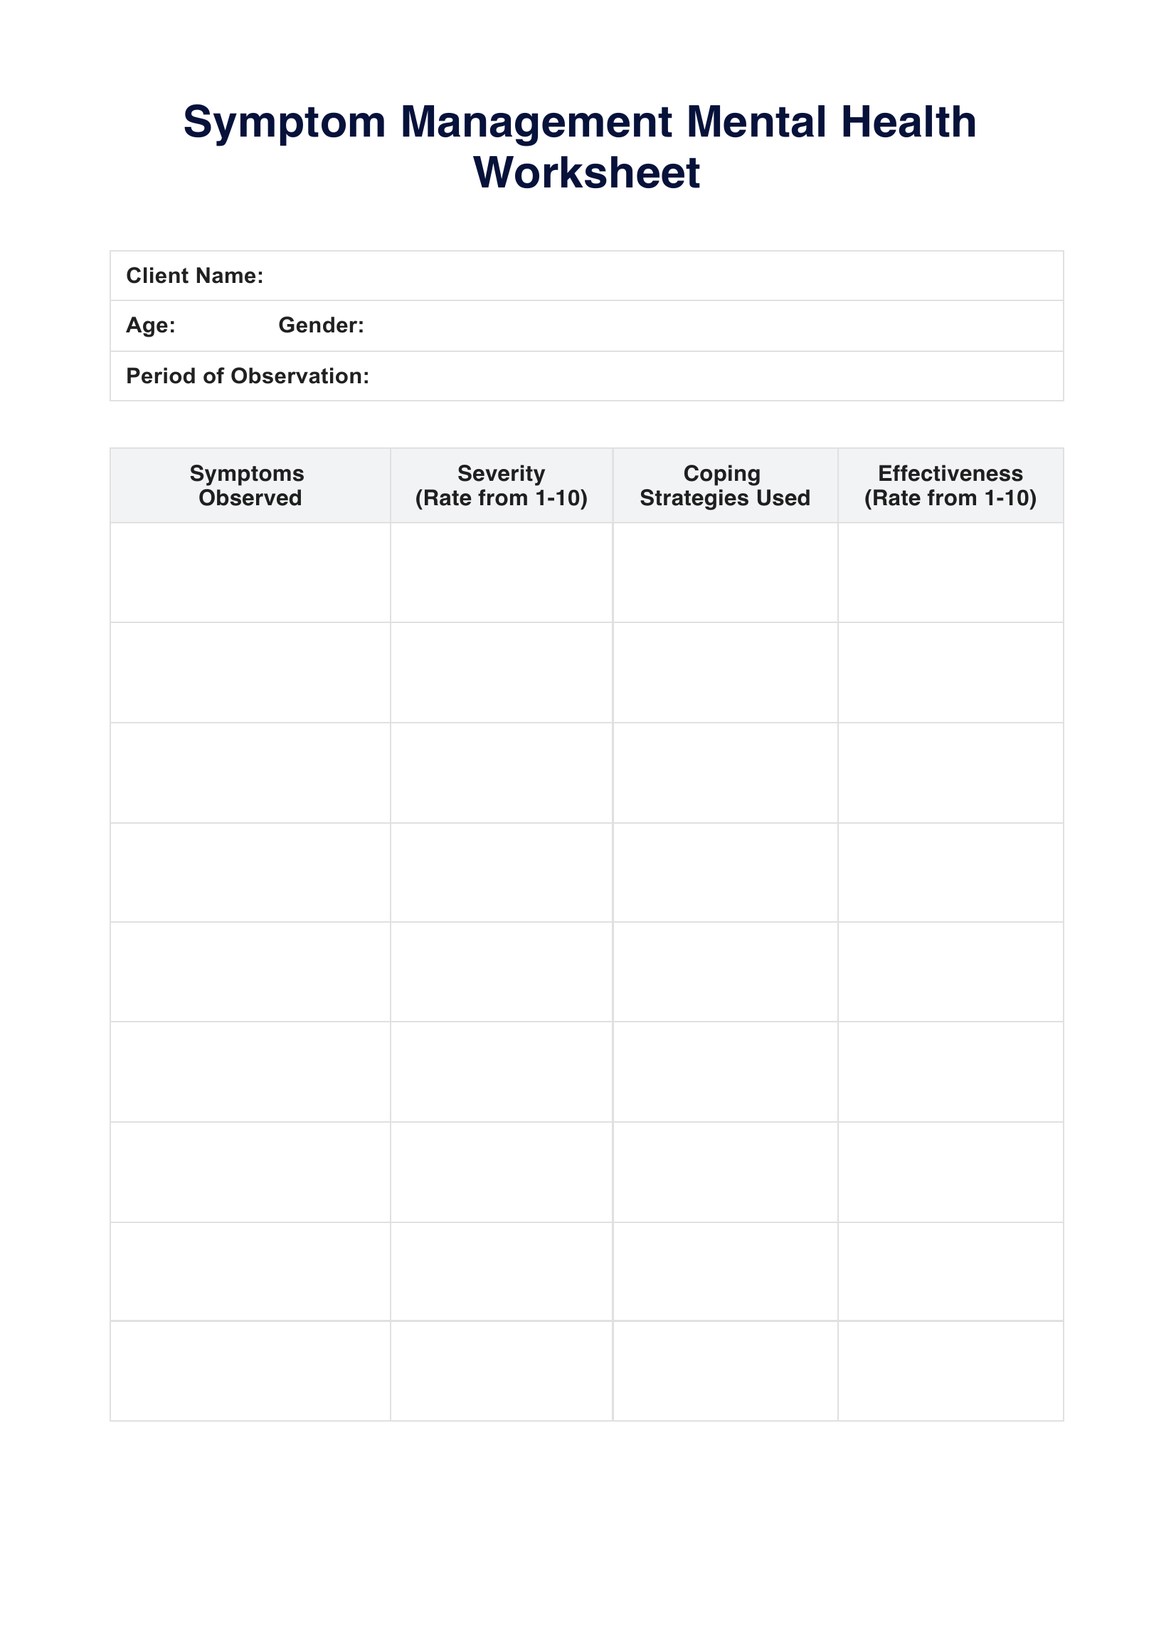 Symptom Management Mental Health Worksheet PDF Example